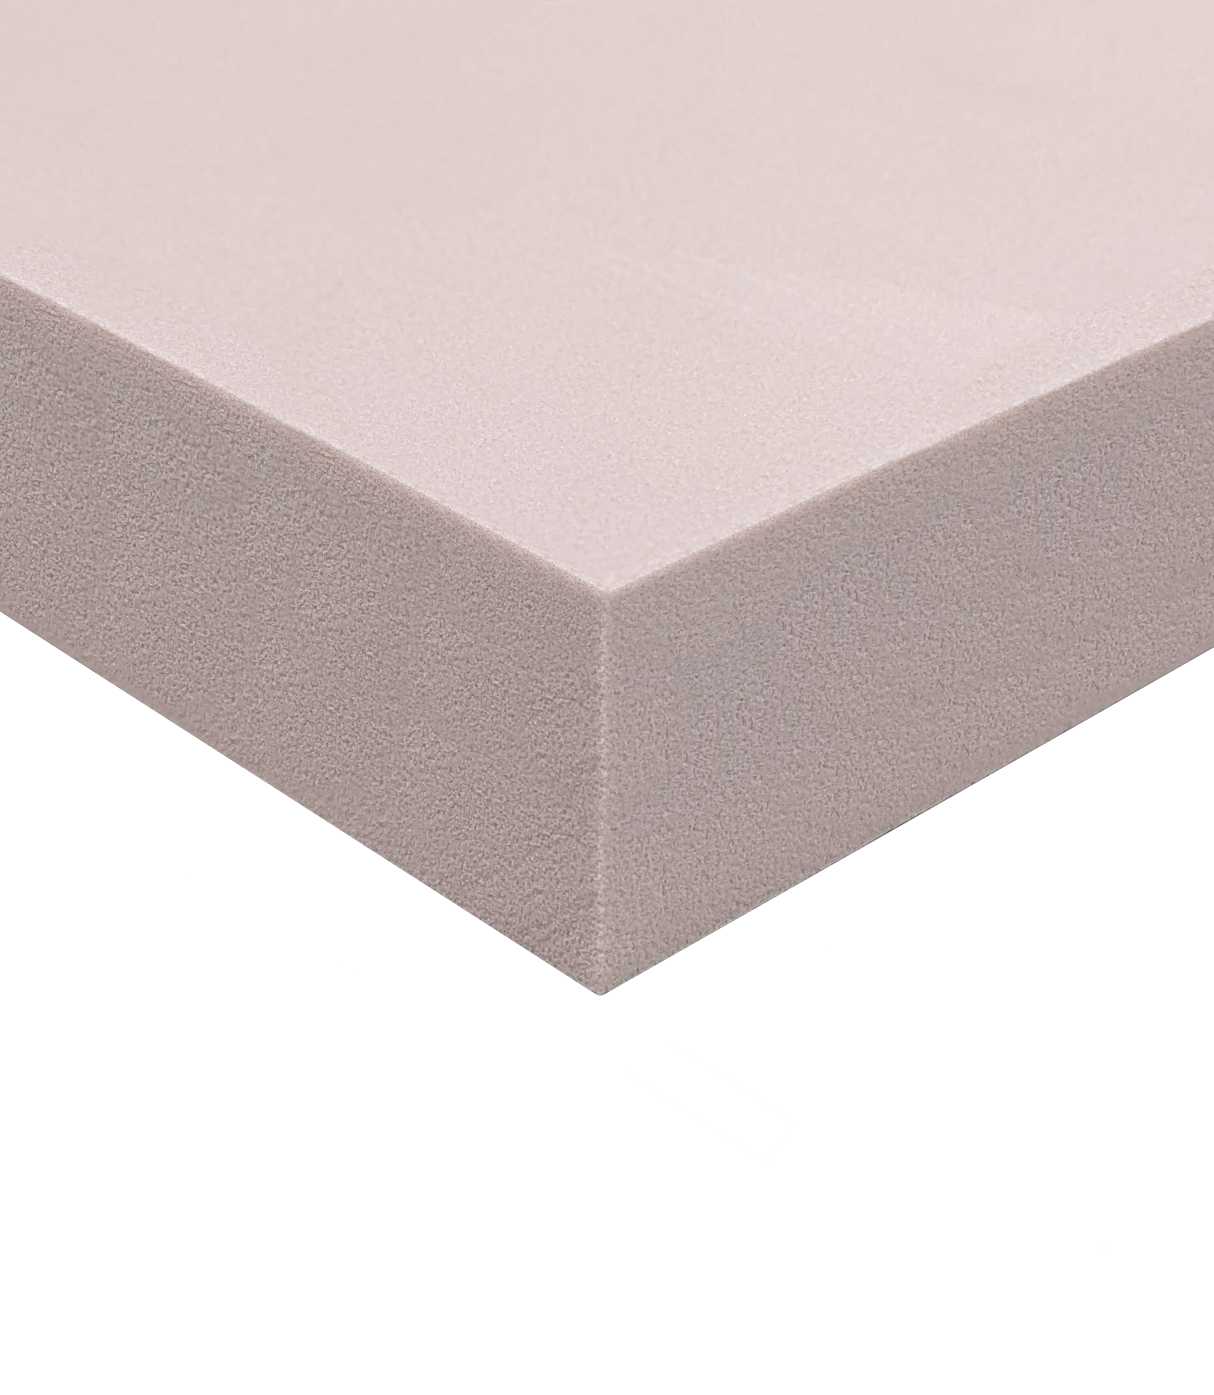 Precision Foam Board from Interstate Plastics